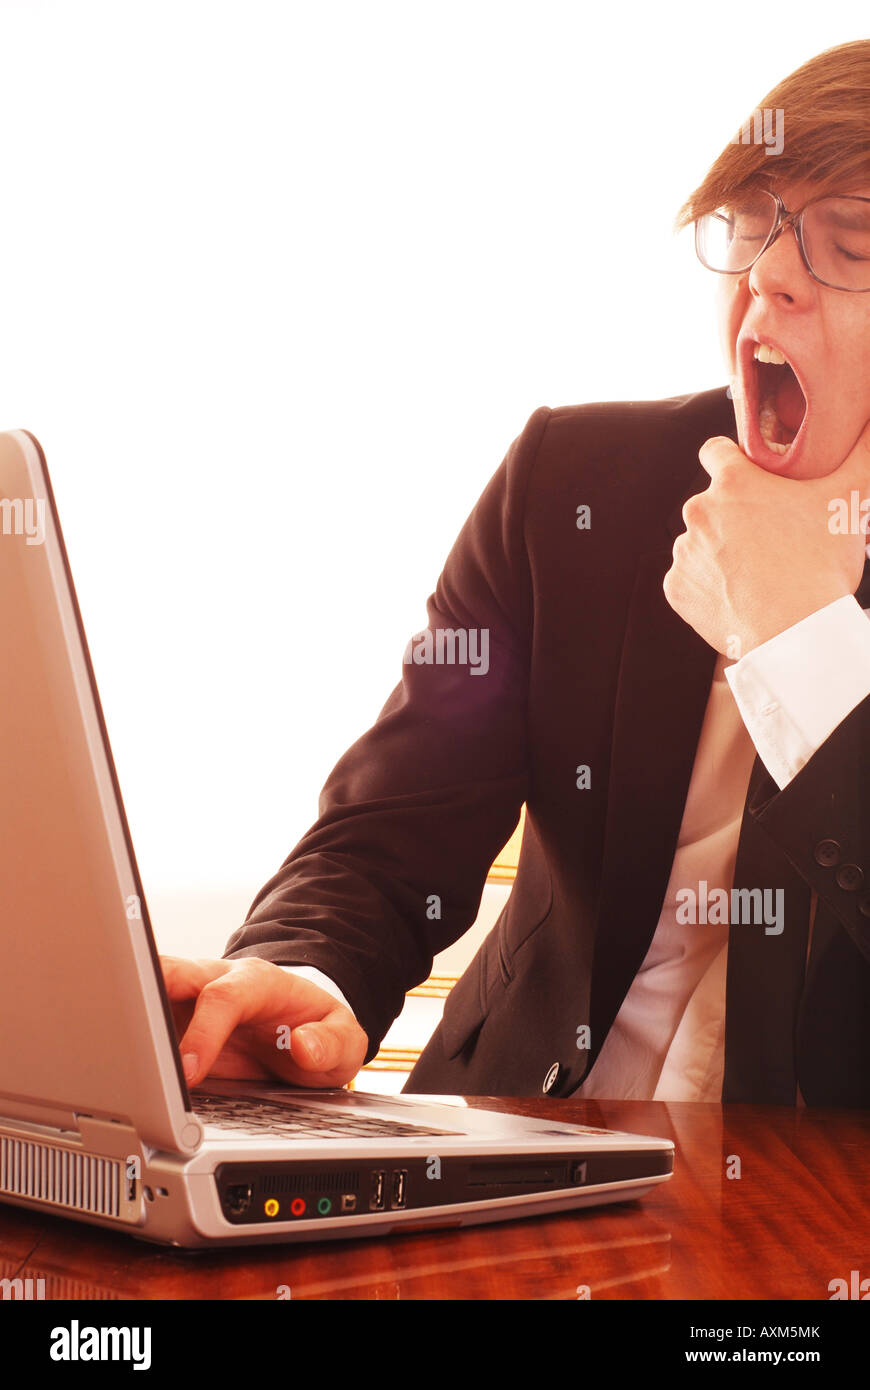 Man yawning on computer - Business Stock Photo